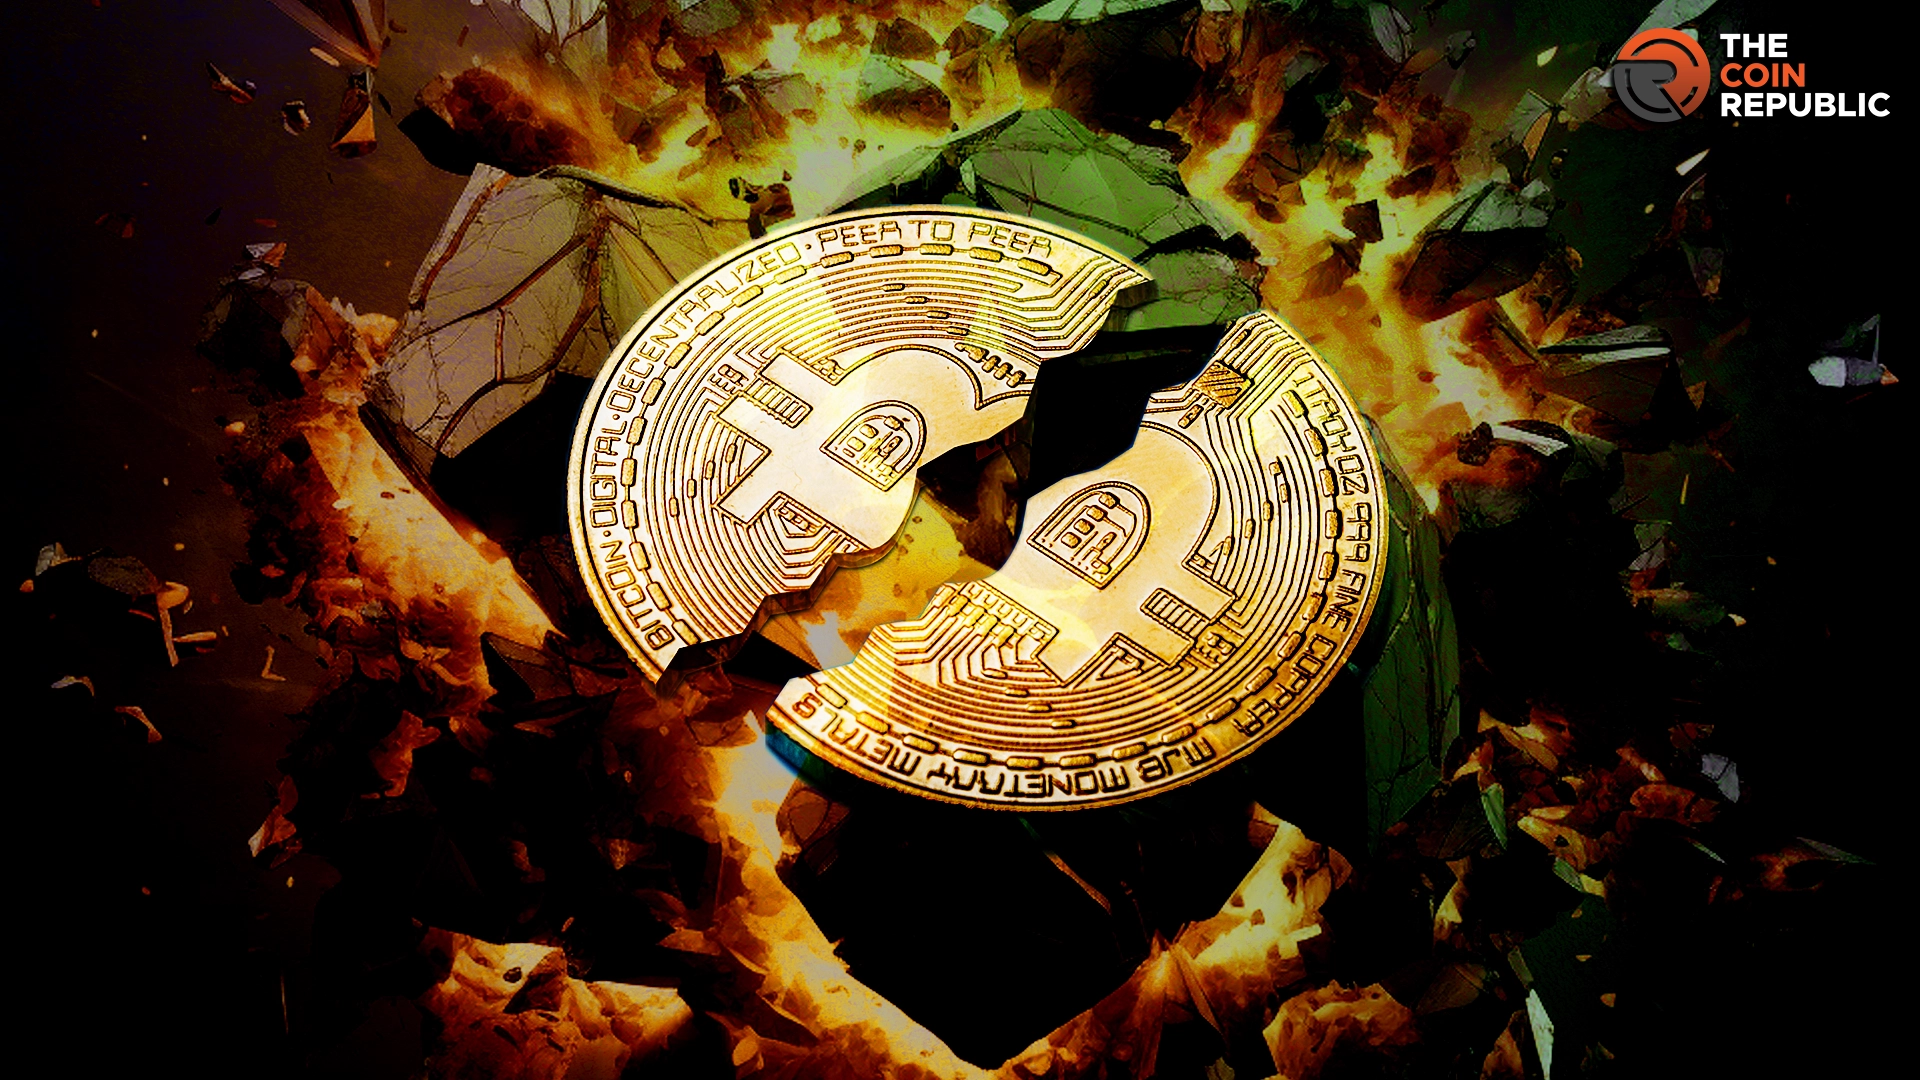 Bitcoin Miner Hut 8 In Headlines After Receiving Buy Ratings